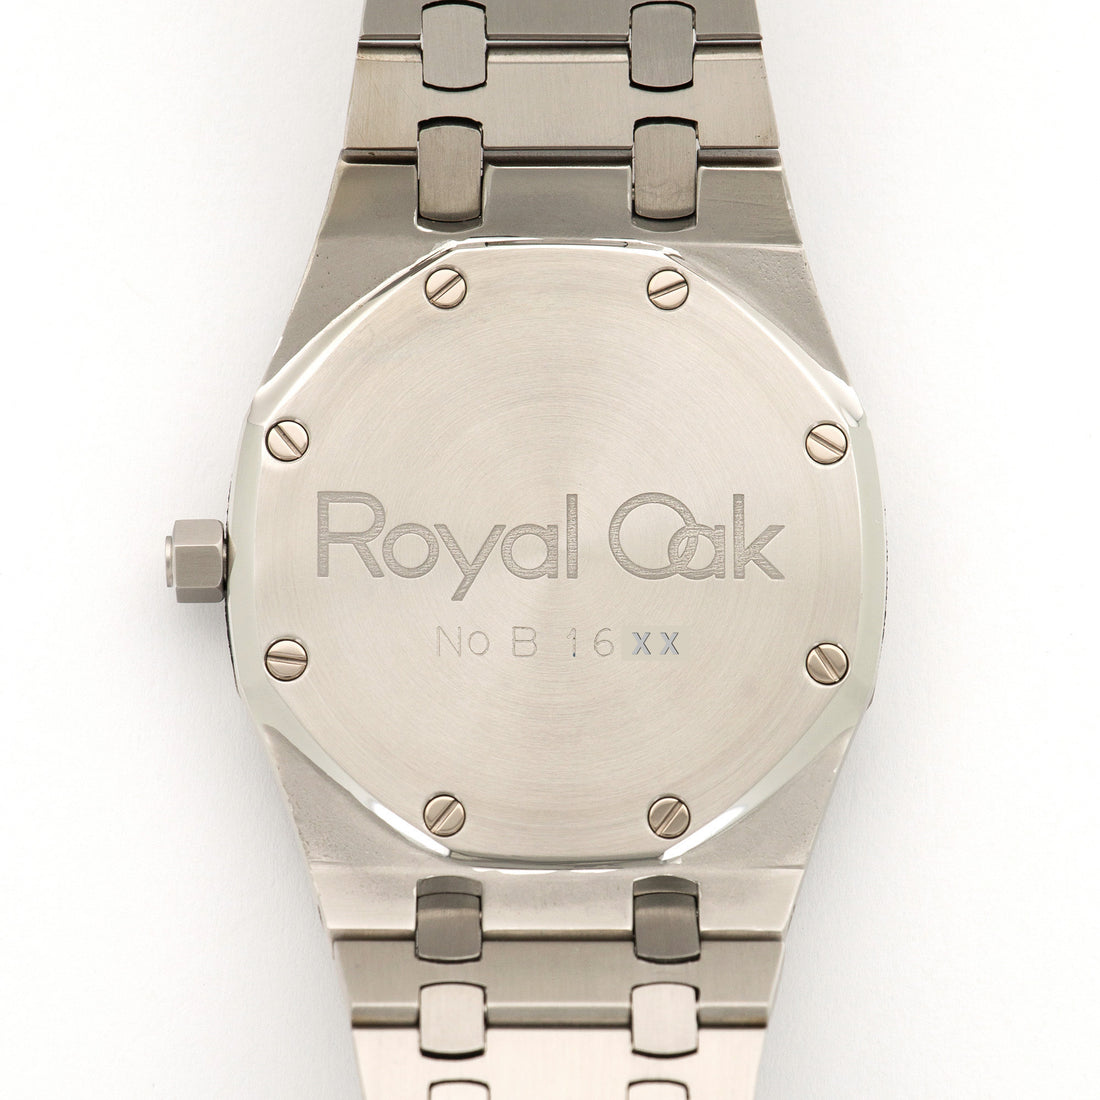 Audemars Piguet B-Series Royal Oak Jumbo Watch Ref. 5402 in Exceptional Condition